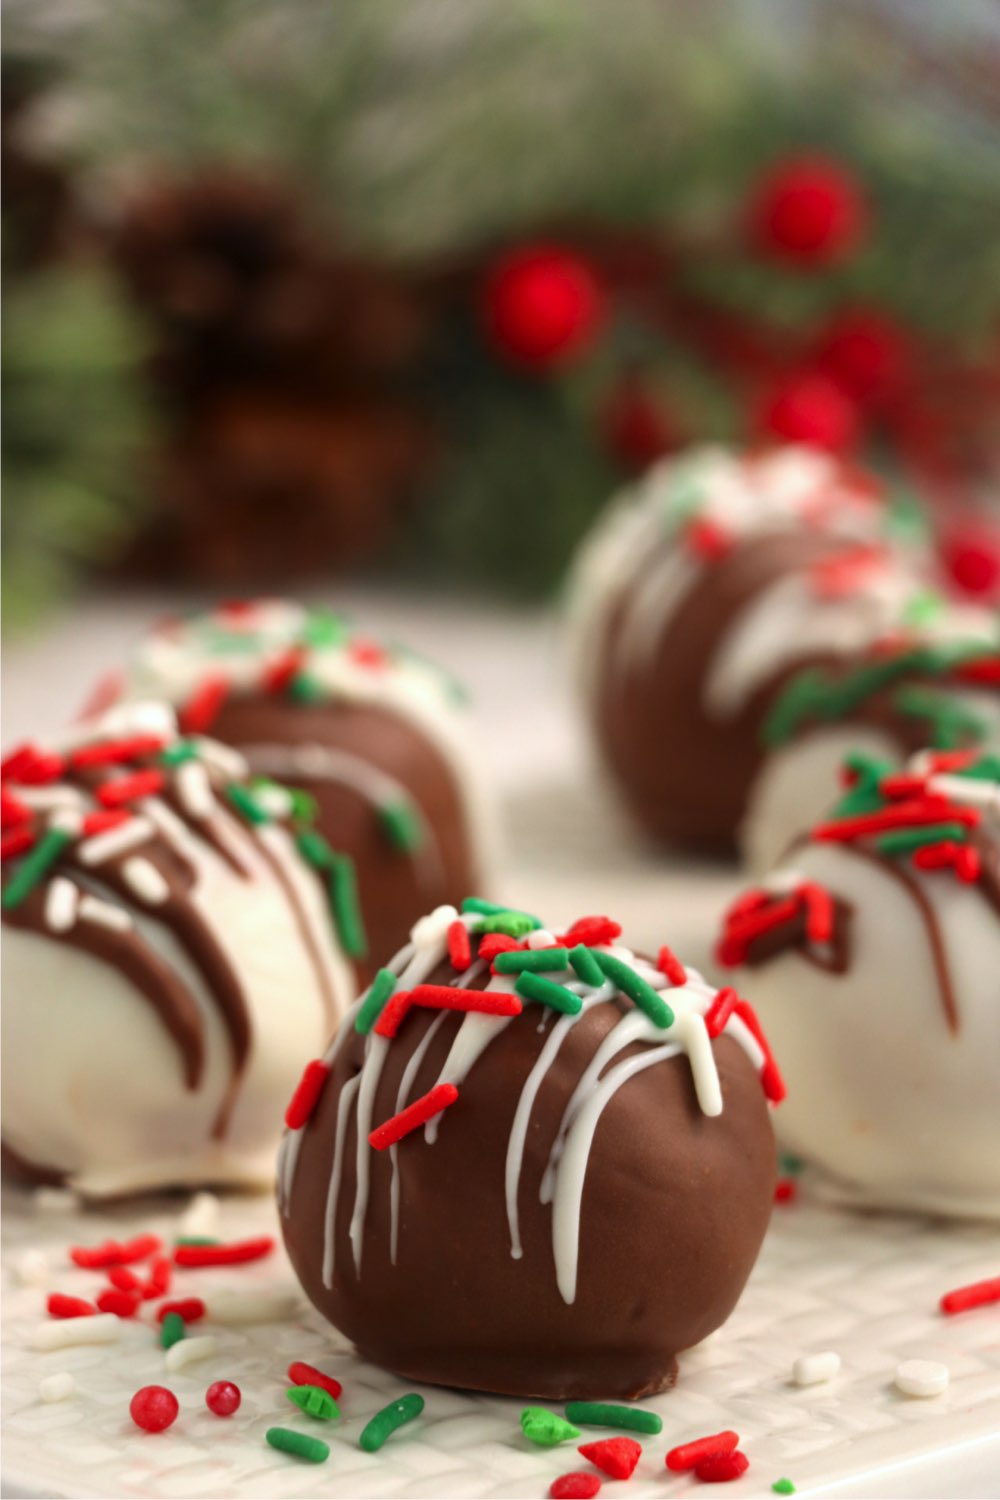 Chocolate covered Christmas truffles